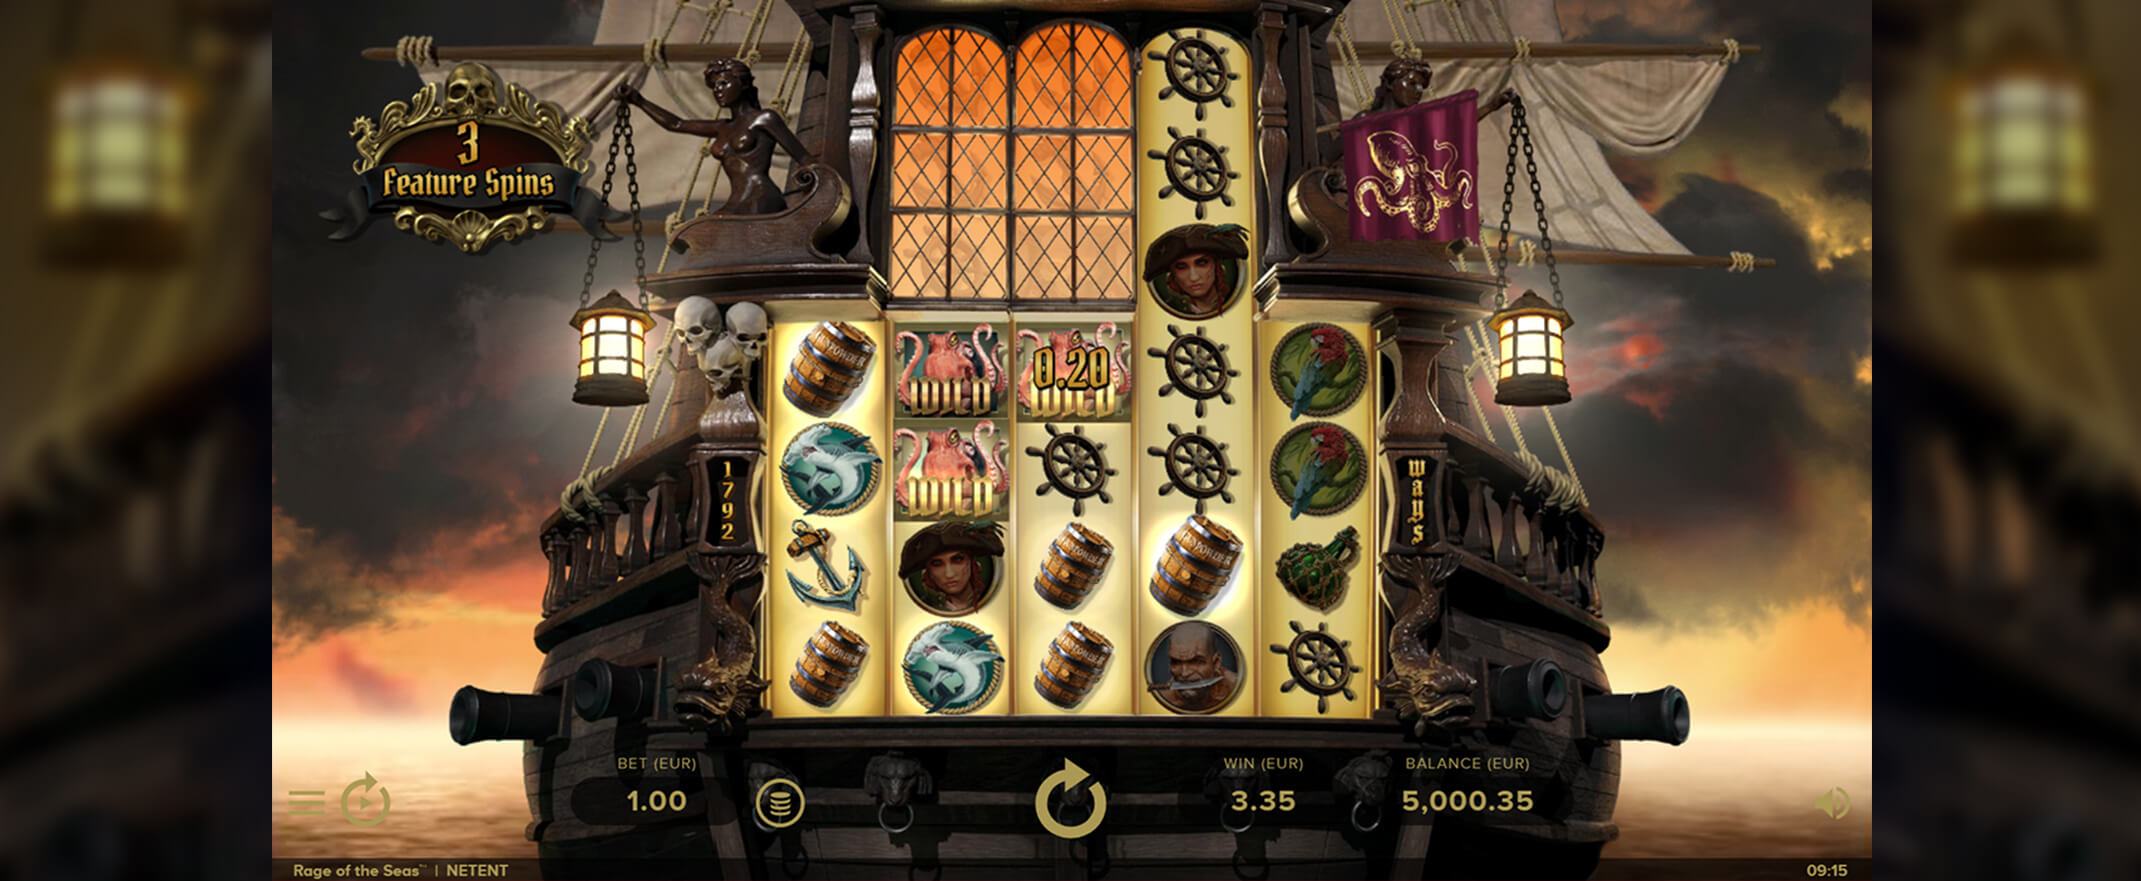 Rage of the Seas Spielautomaten Bewertung